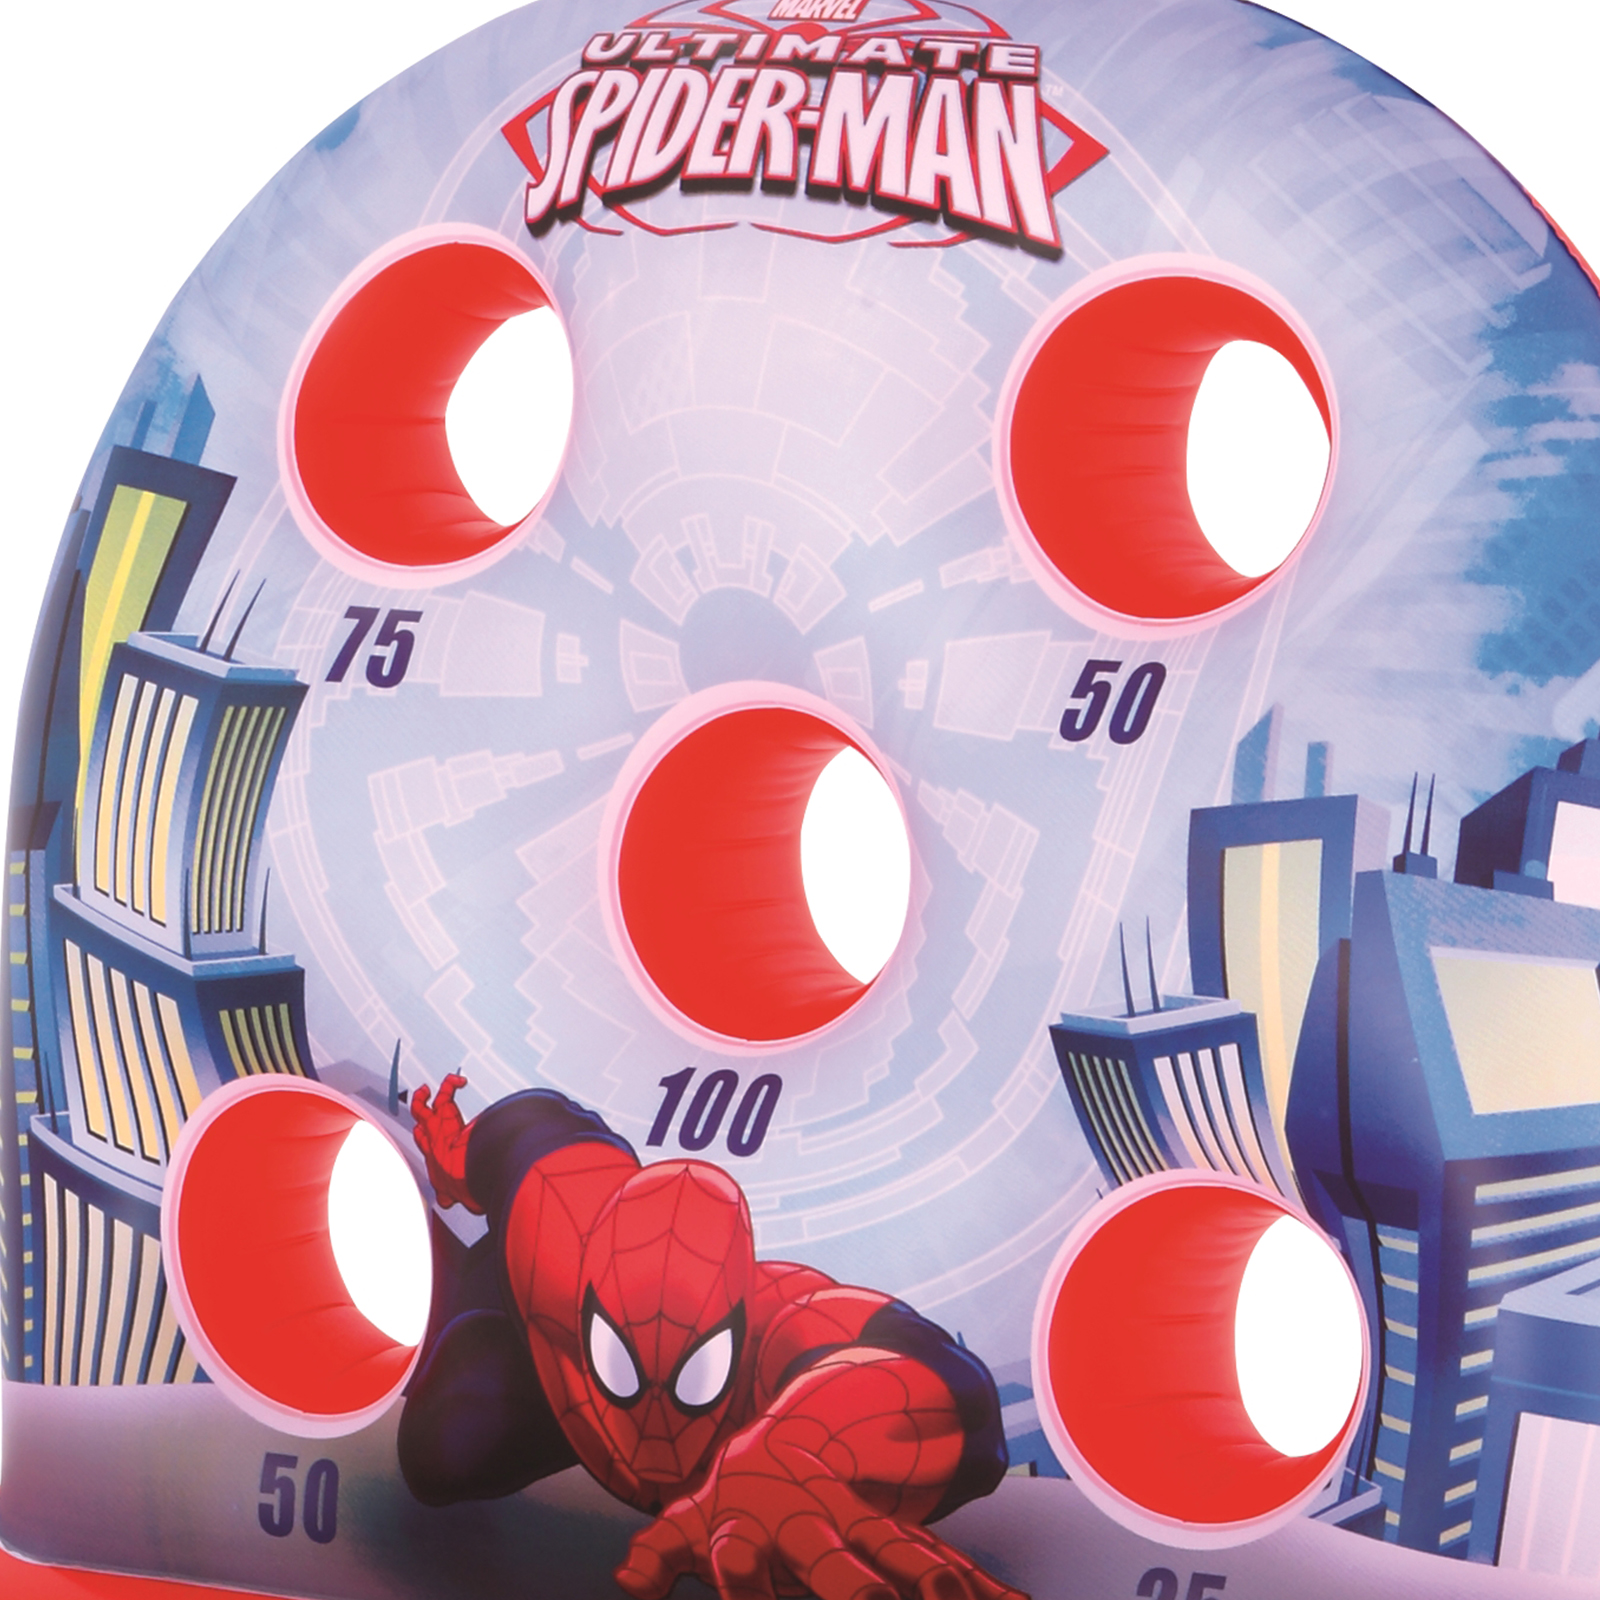 Piscina Hinchable Autoportante Infantil Bestway 155x99 Cm 6 Bolas Diseño Spiderman